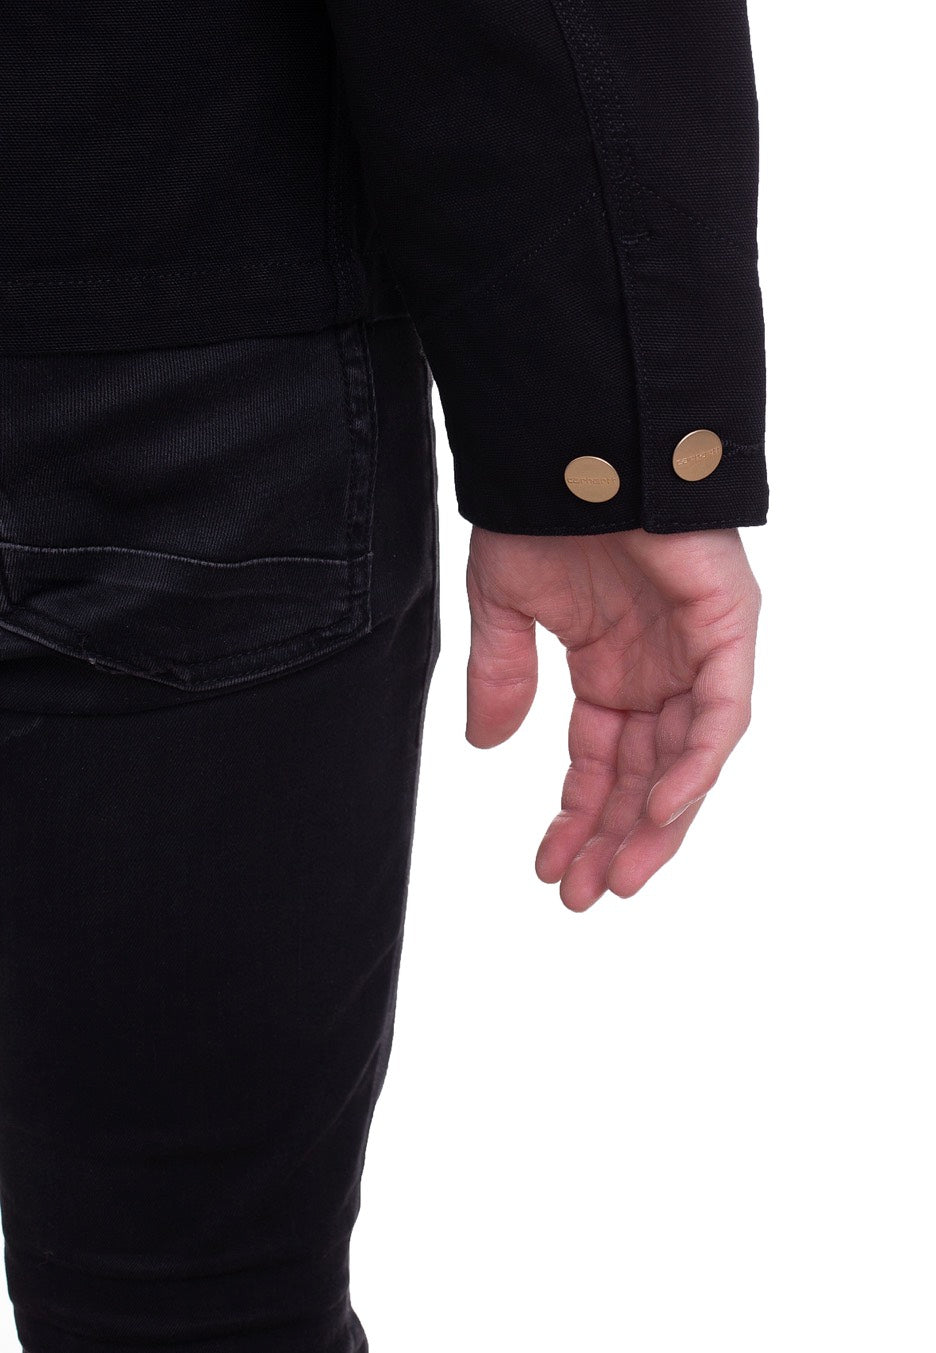 Carhartt WIP - Michigan Coat Black - Jeans Jacket | Men-Image